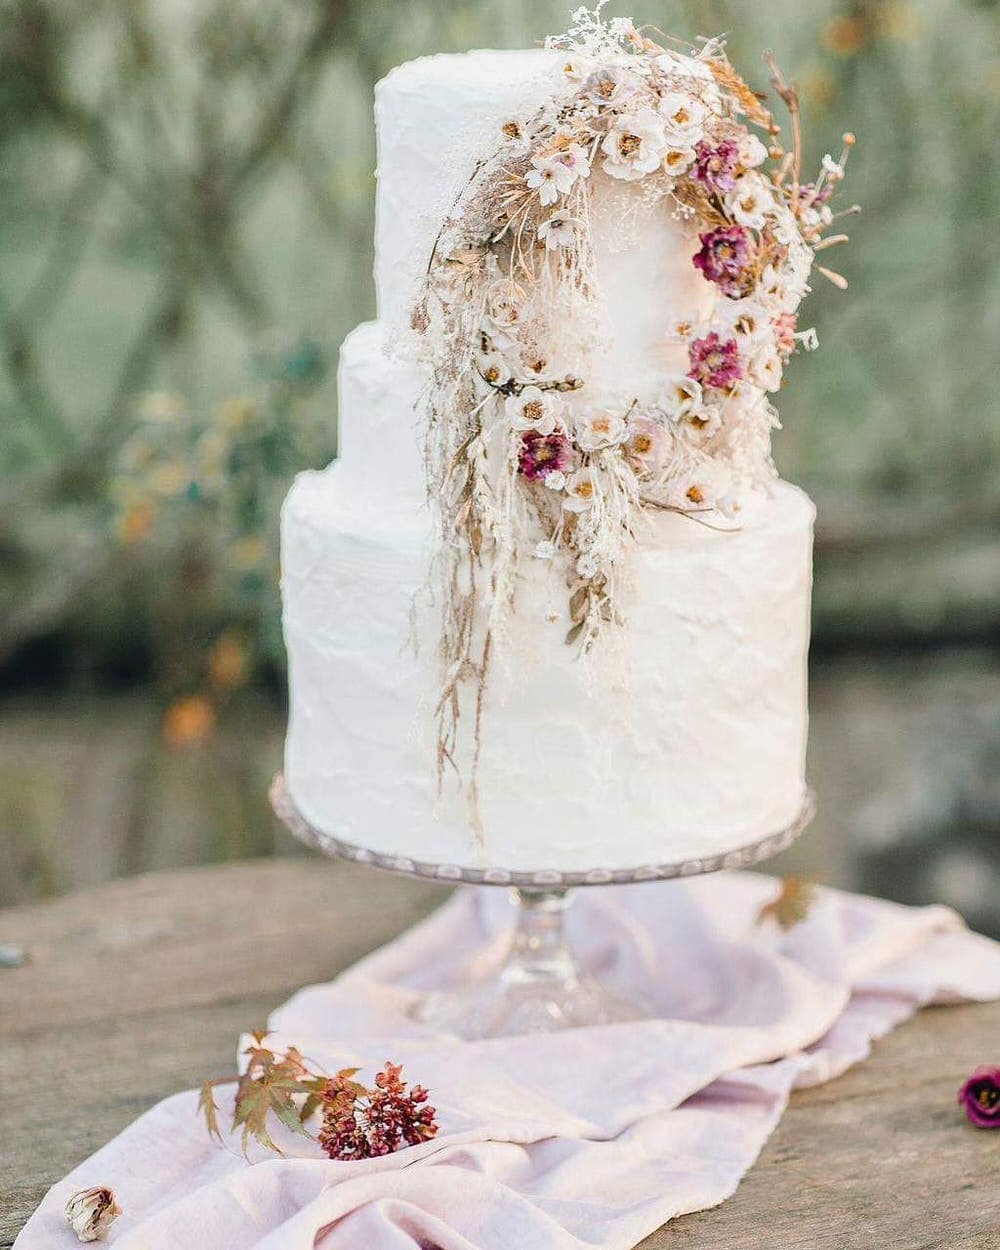 Elegant and Exquisite: 30 Wedding Cakes Worth Celebrating